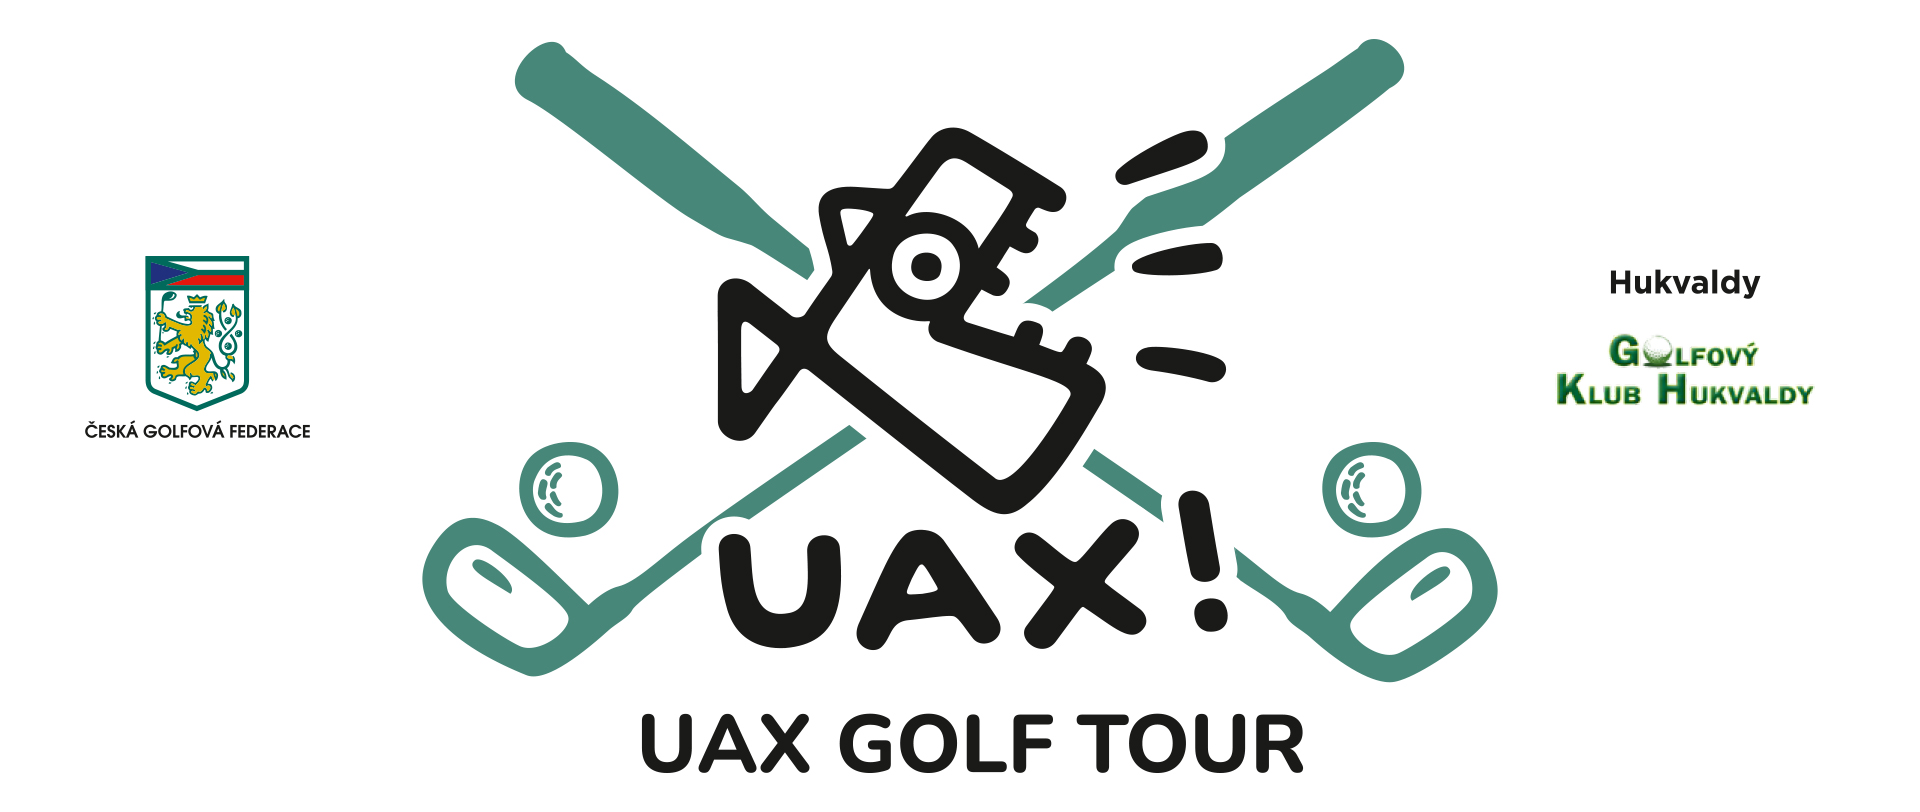 UAX Golf Tour Hukvaldy